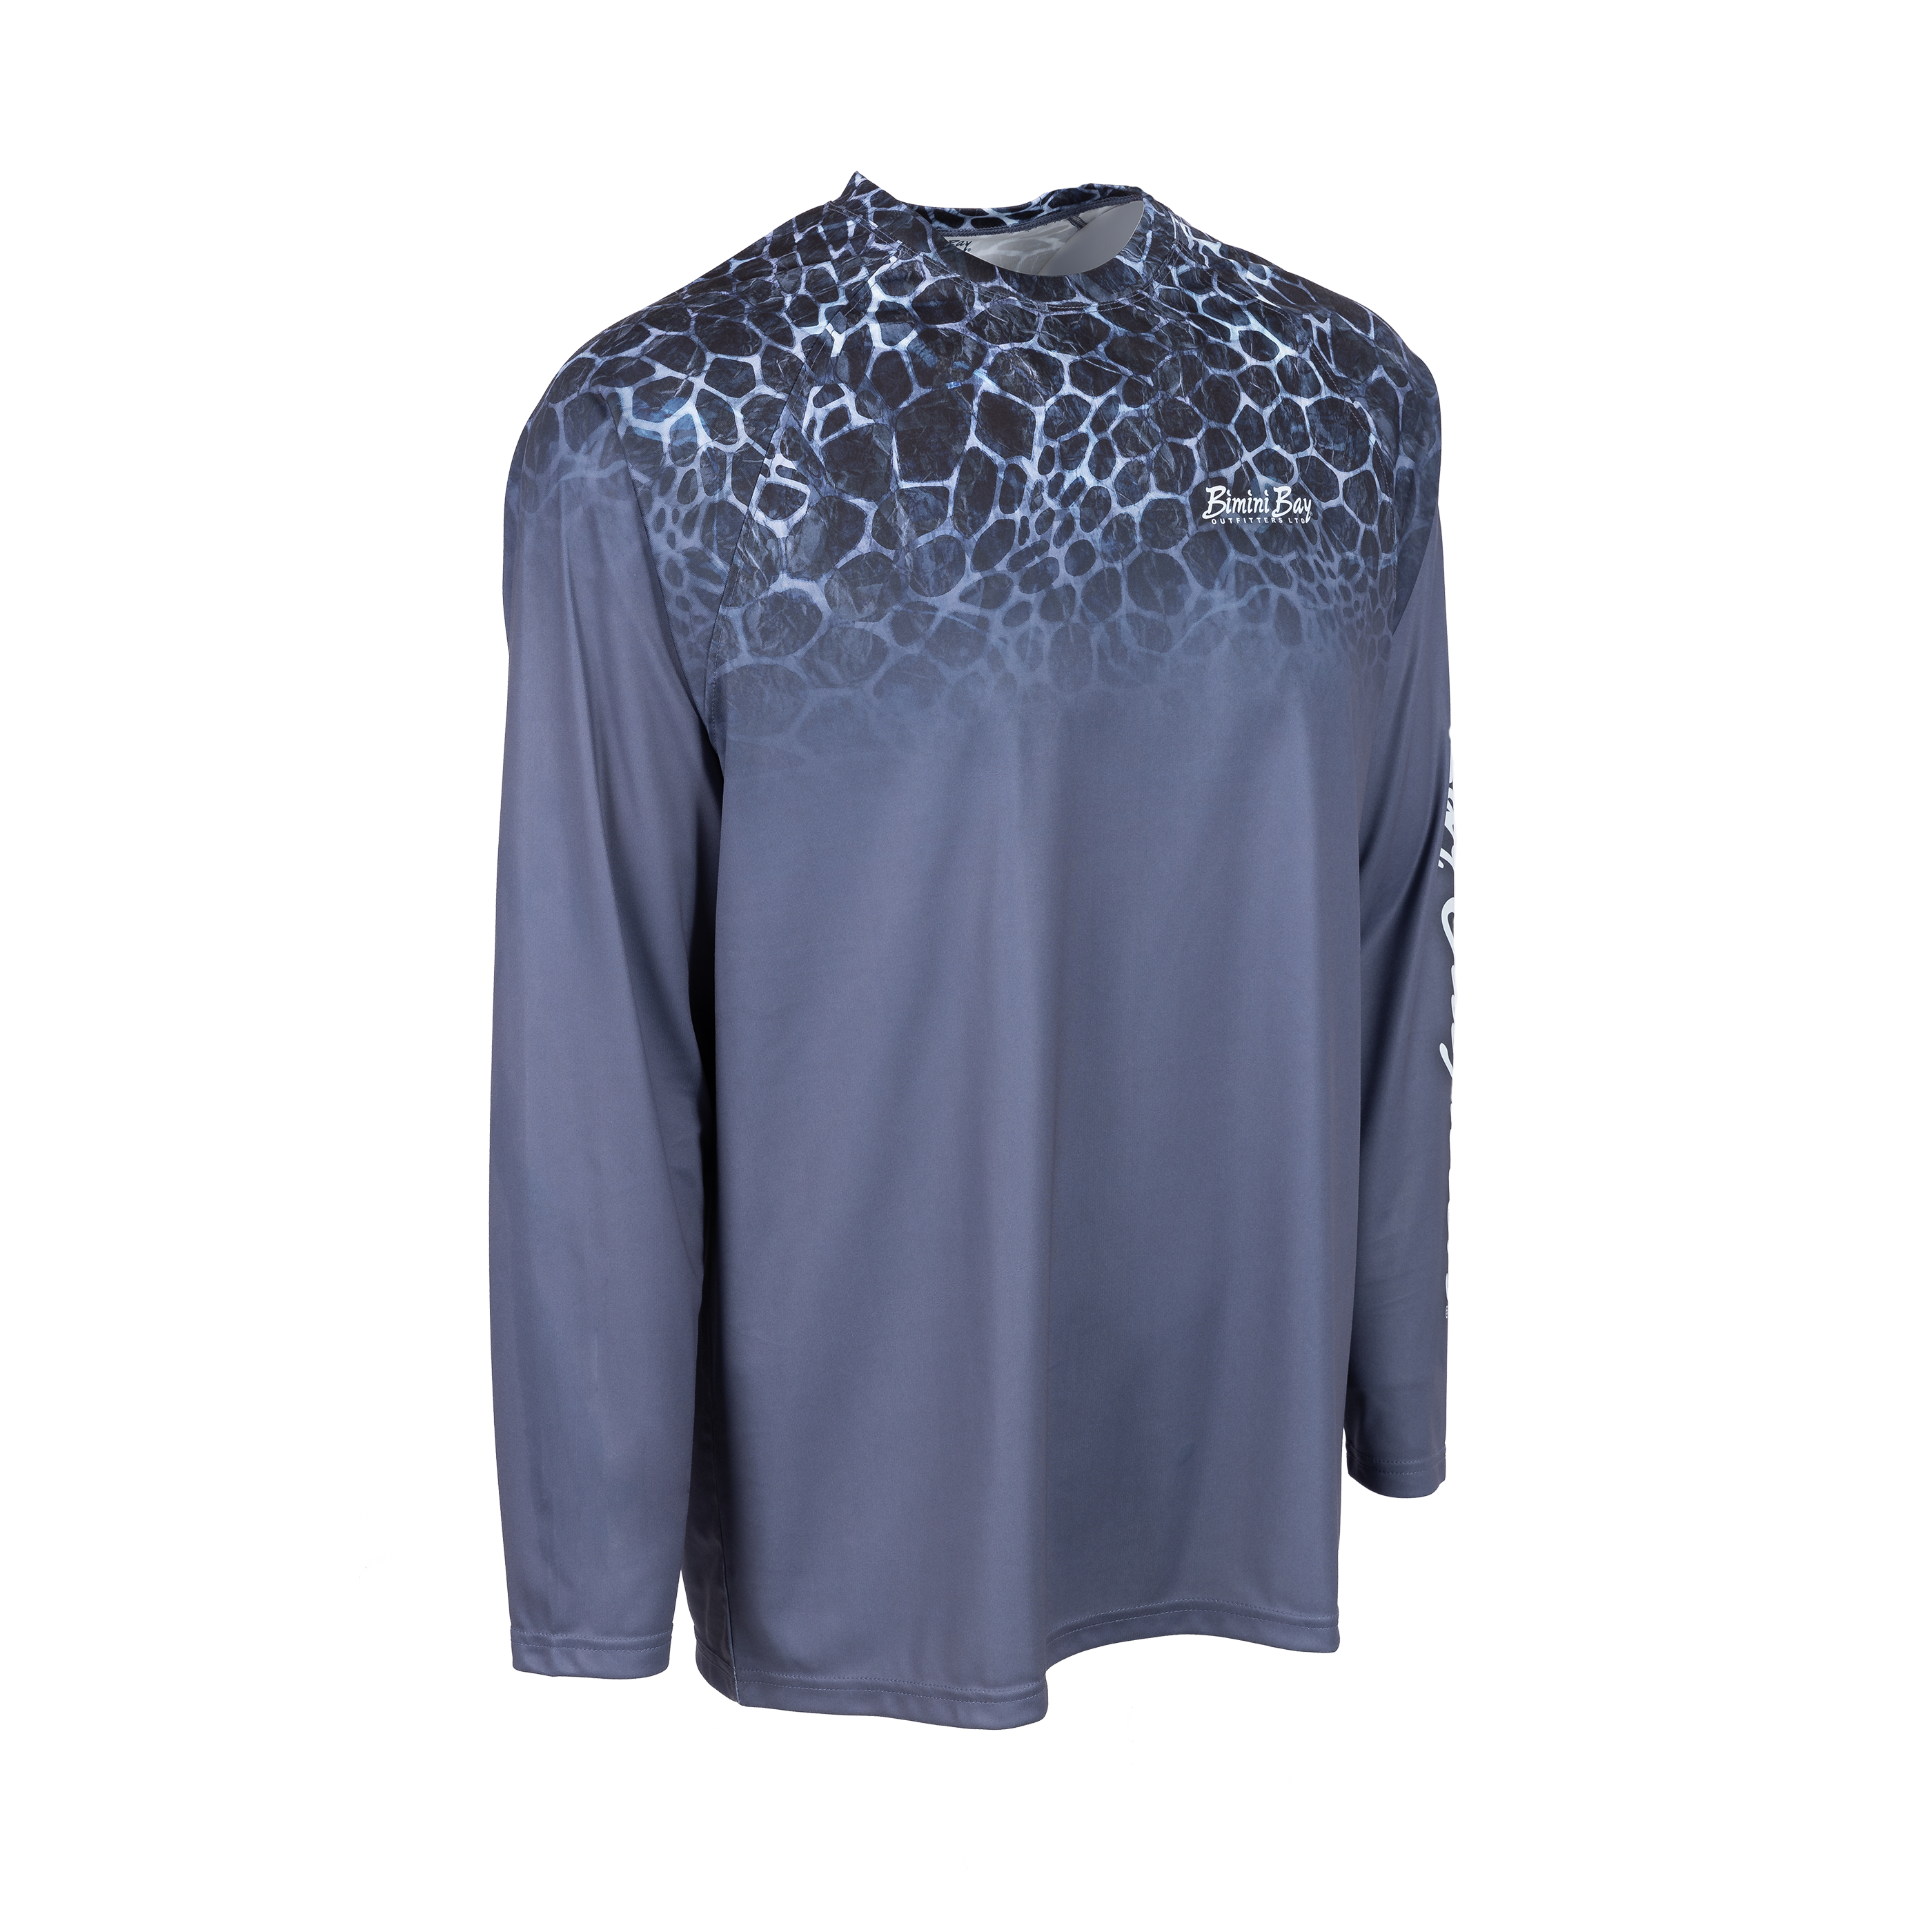 BIMINI BAY OUTFITTERS Hook M' Men's Long Sleeve Shirt, XL Inshore Baltic  Reef